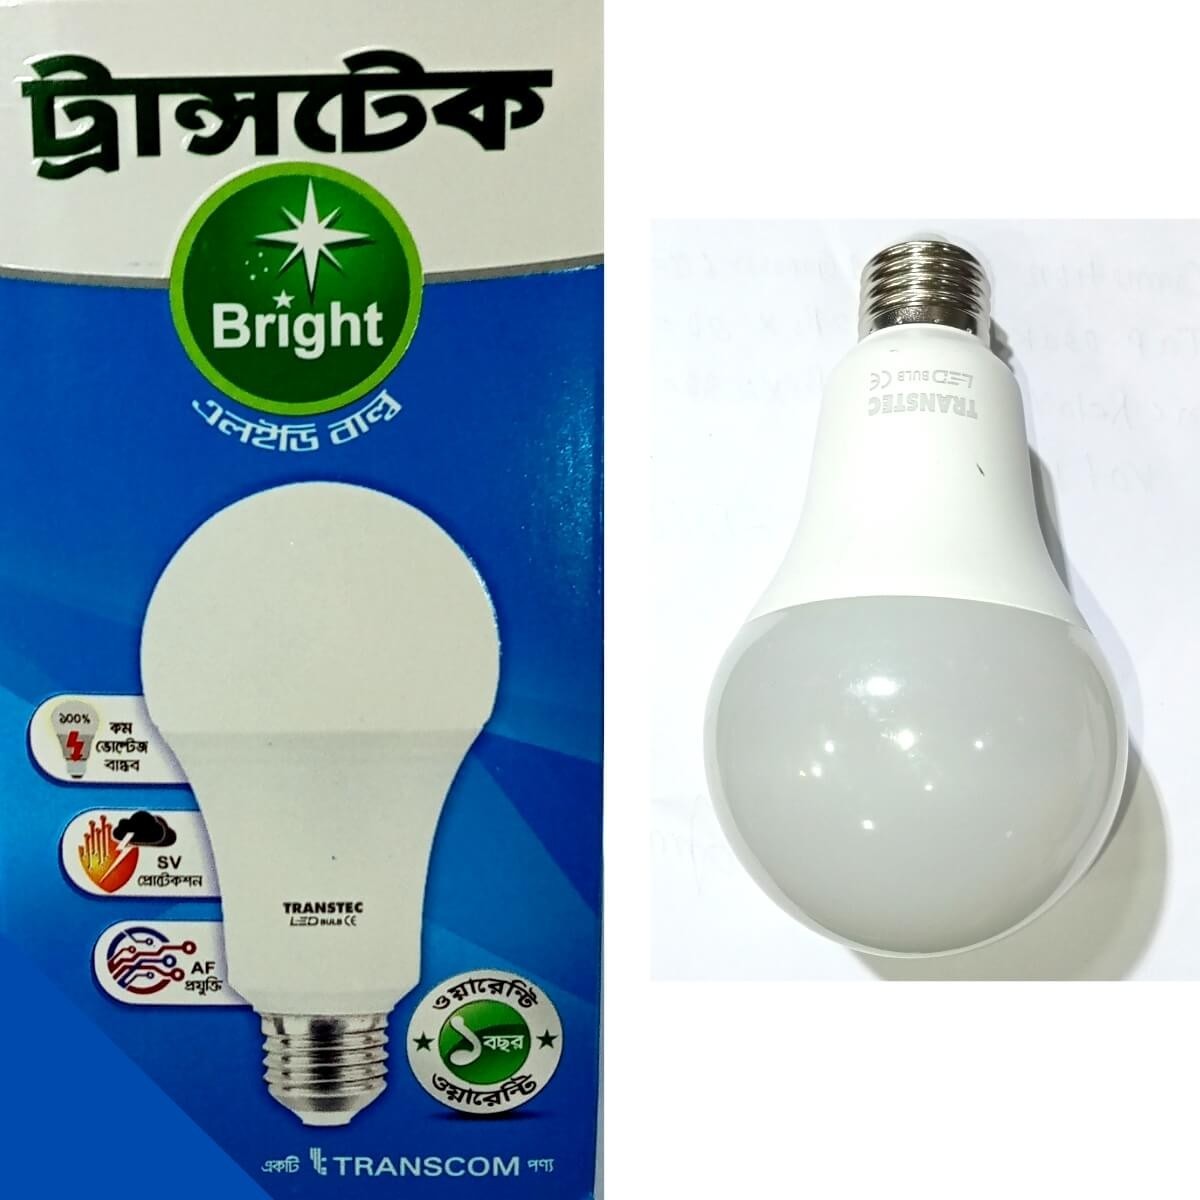 Transtec Bright 9Watt LED Bulb প্যাচ টাইপ... BD